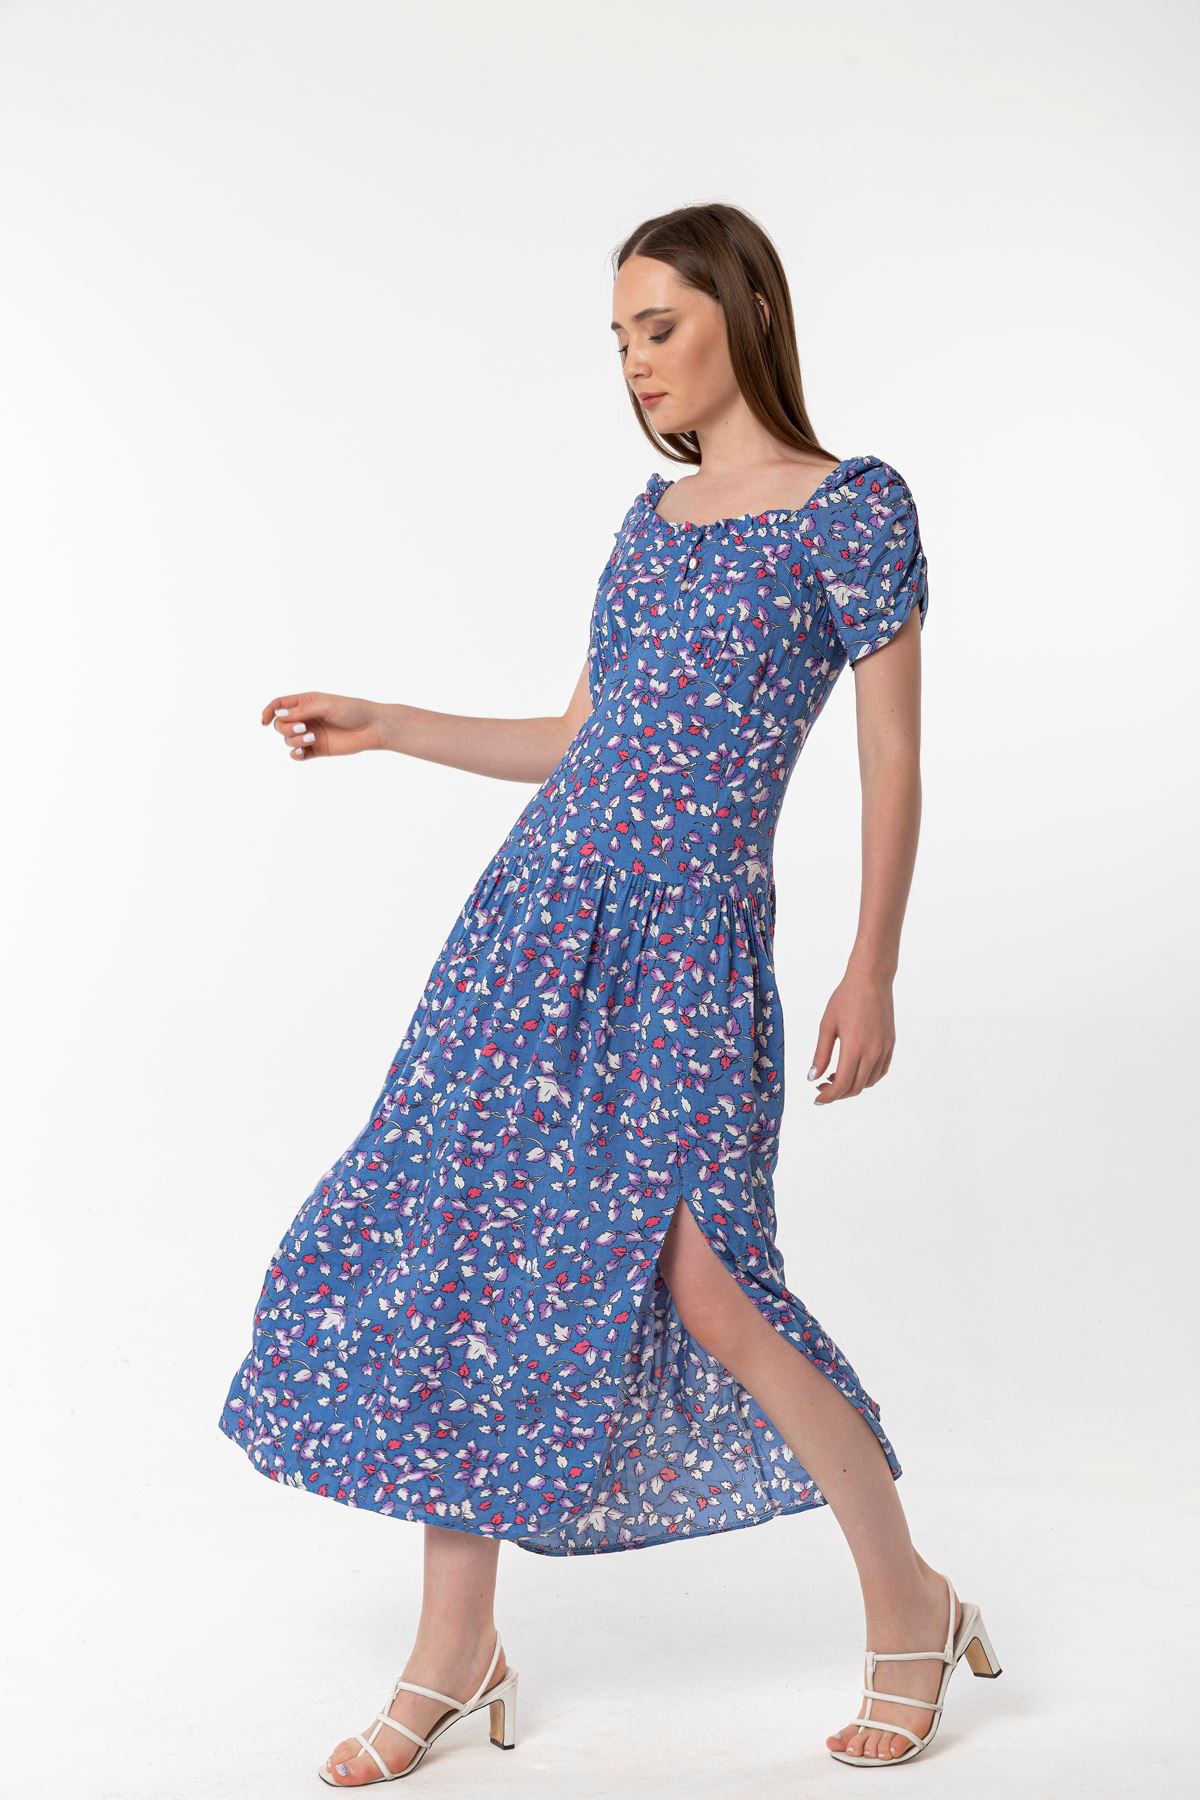 فستان نسائي قماش استيعاب ذراع قصير طوق مربع ميدي قالب مريح نمط زهرة - ازرق